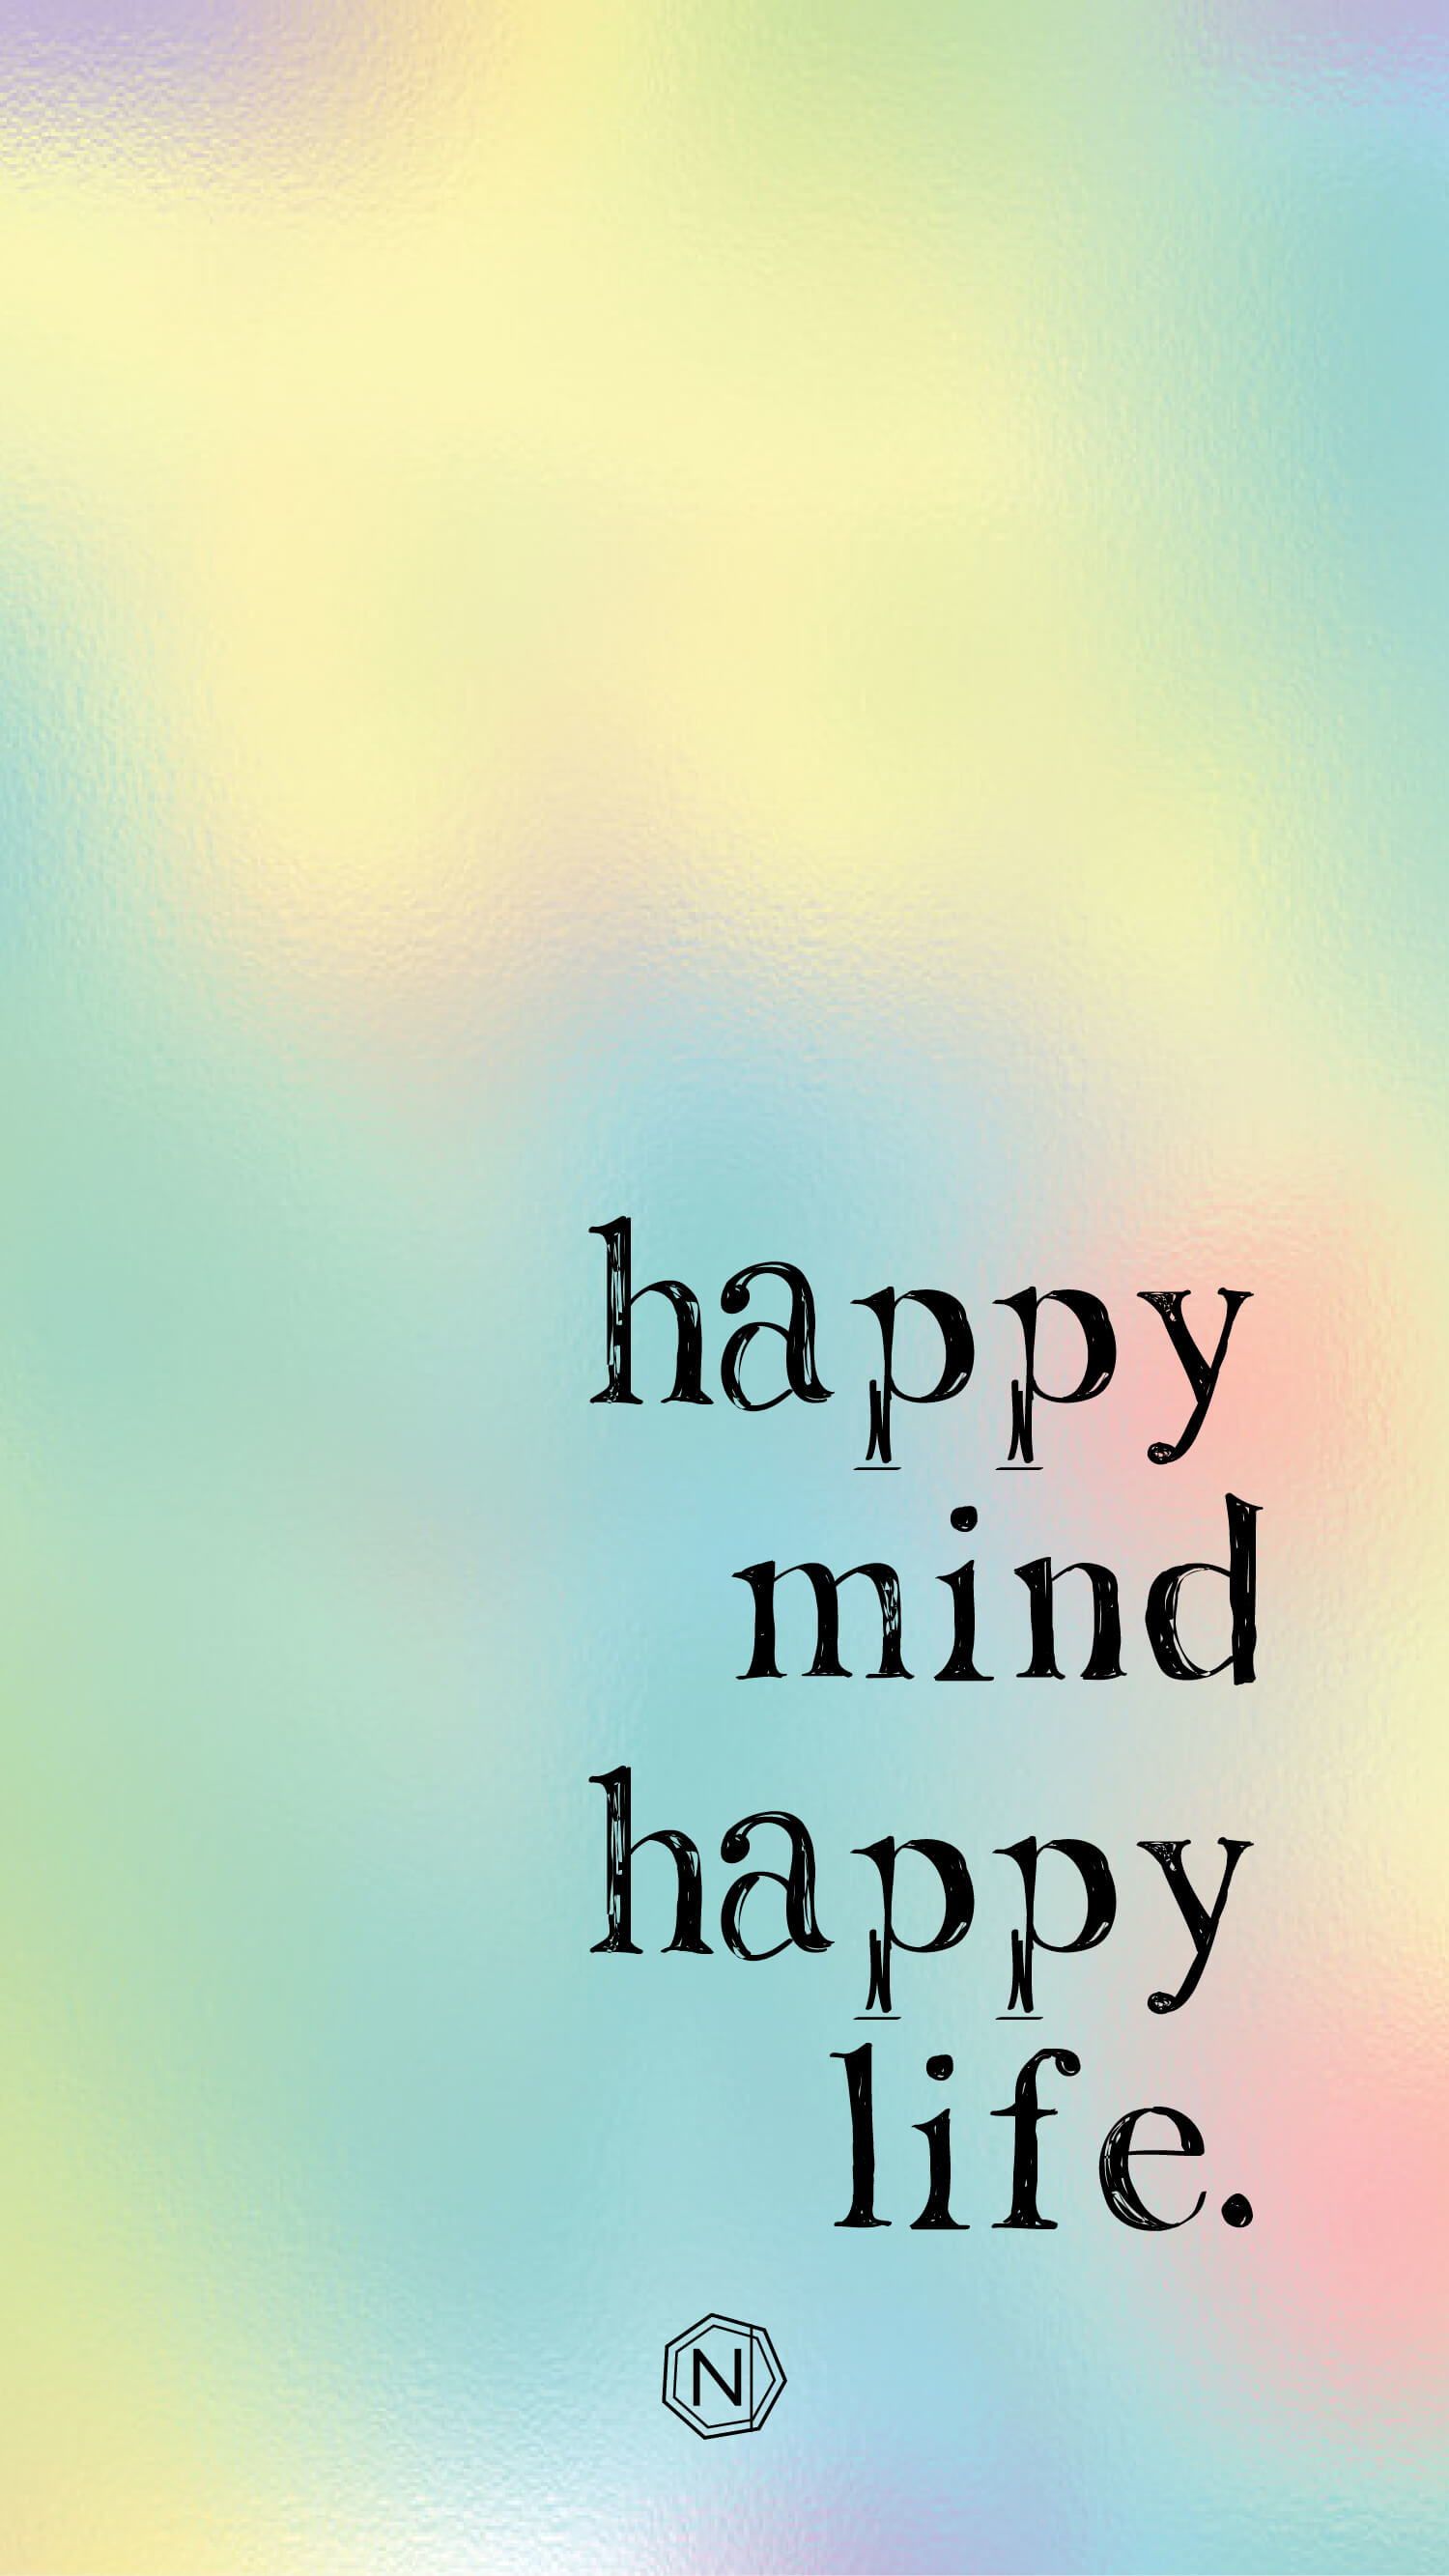 NJOOYS®. Happy mind happy life, Happy minds, Happy quotes inspirational